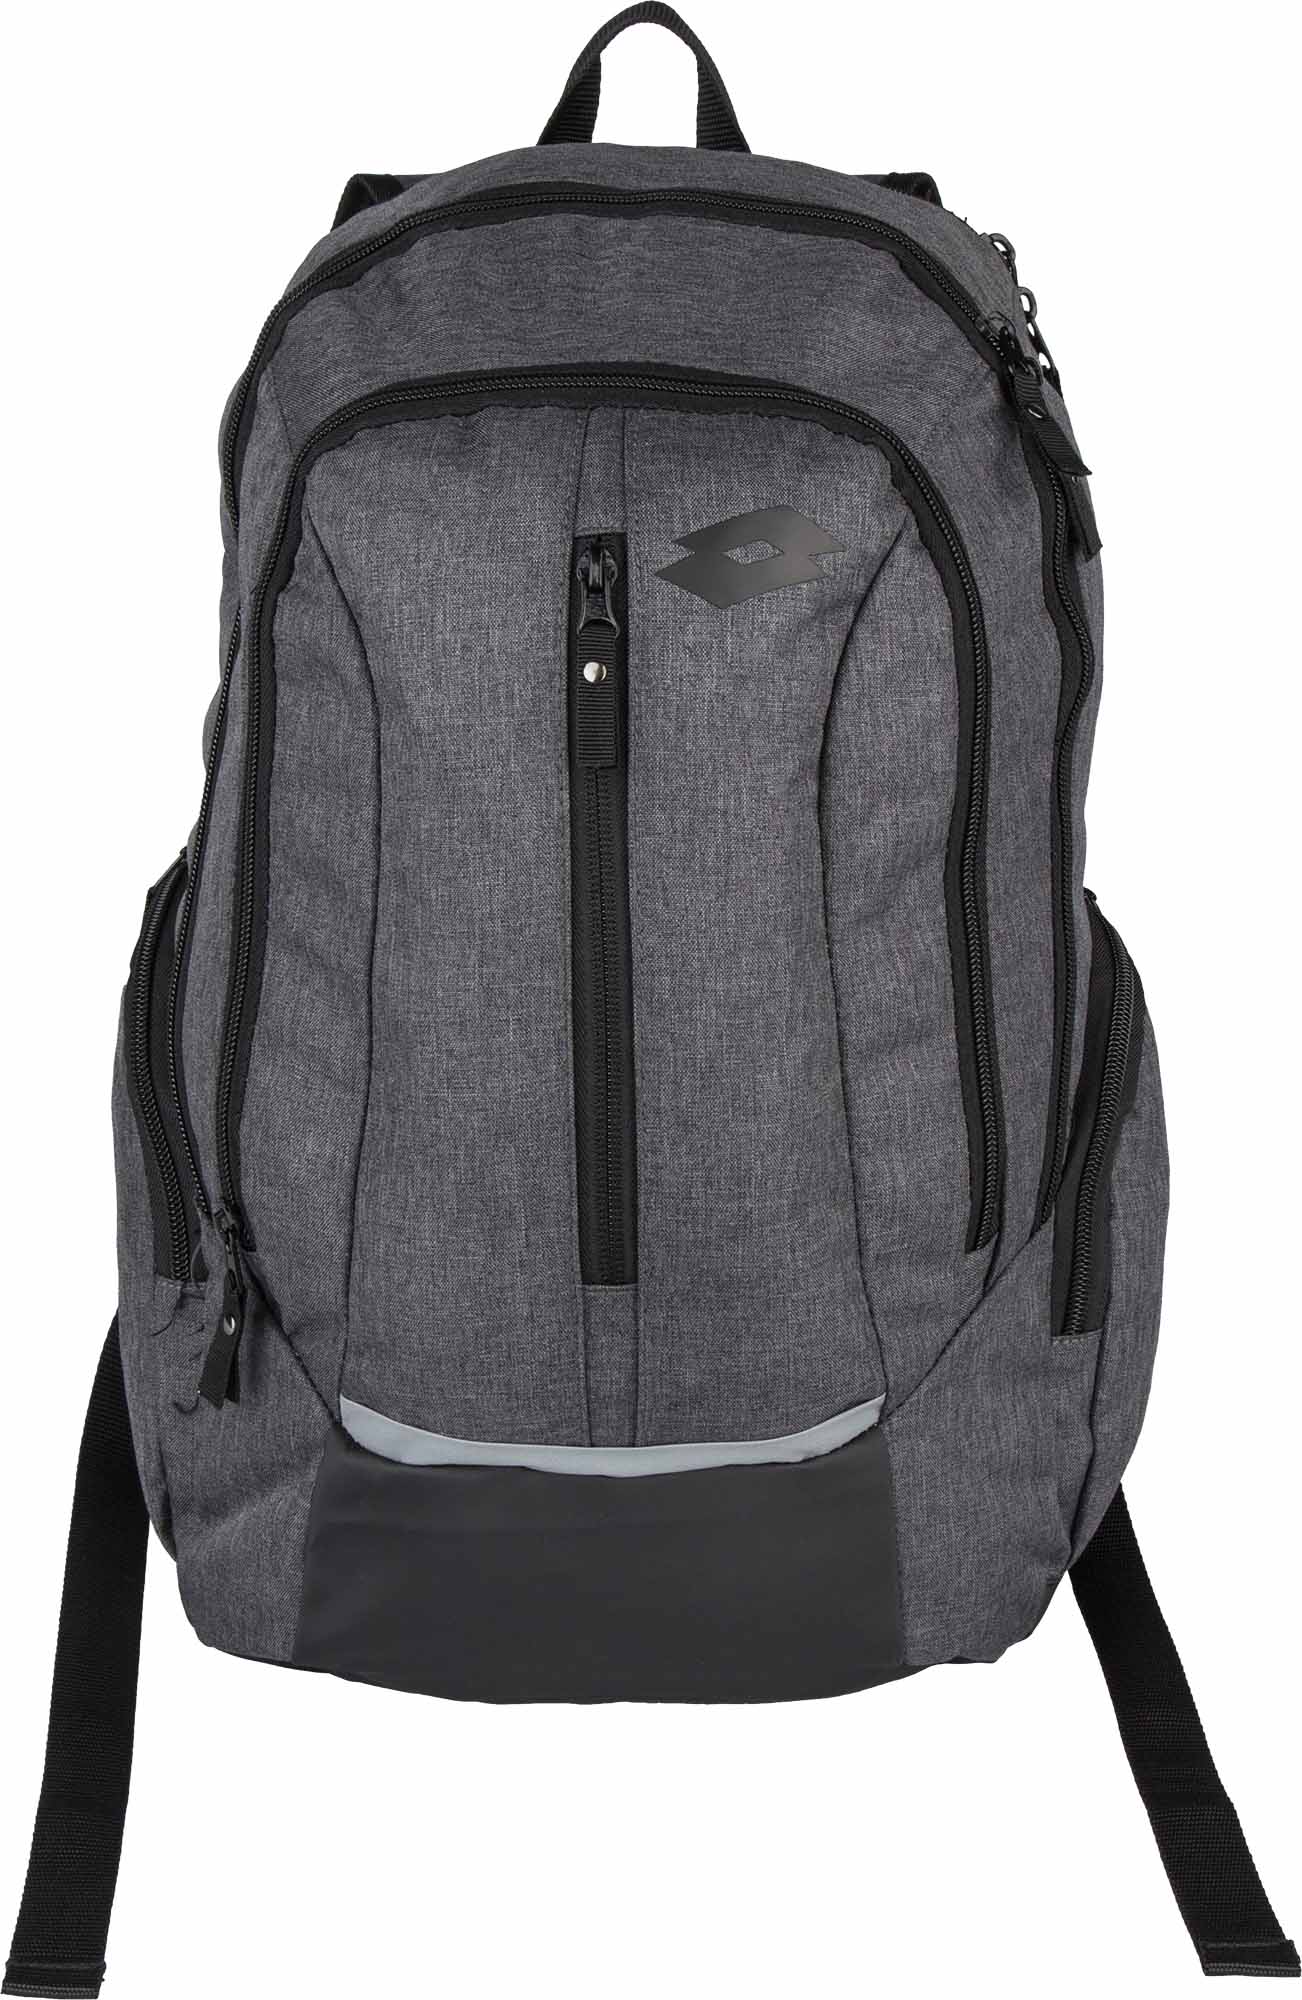 Lotto Sport Italia Grey L Backpack Bag 32 x 40 x 14 cm 197224 8412688197224  | eBay